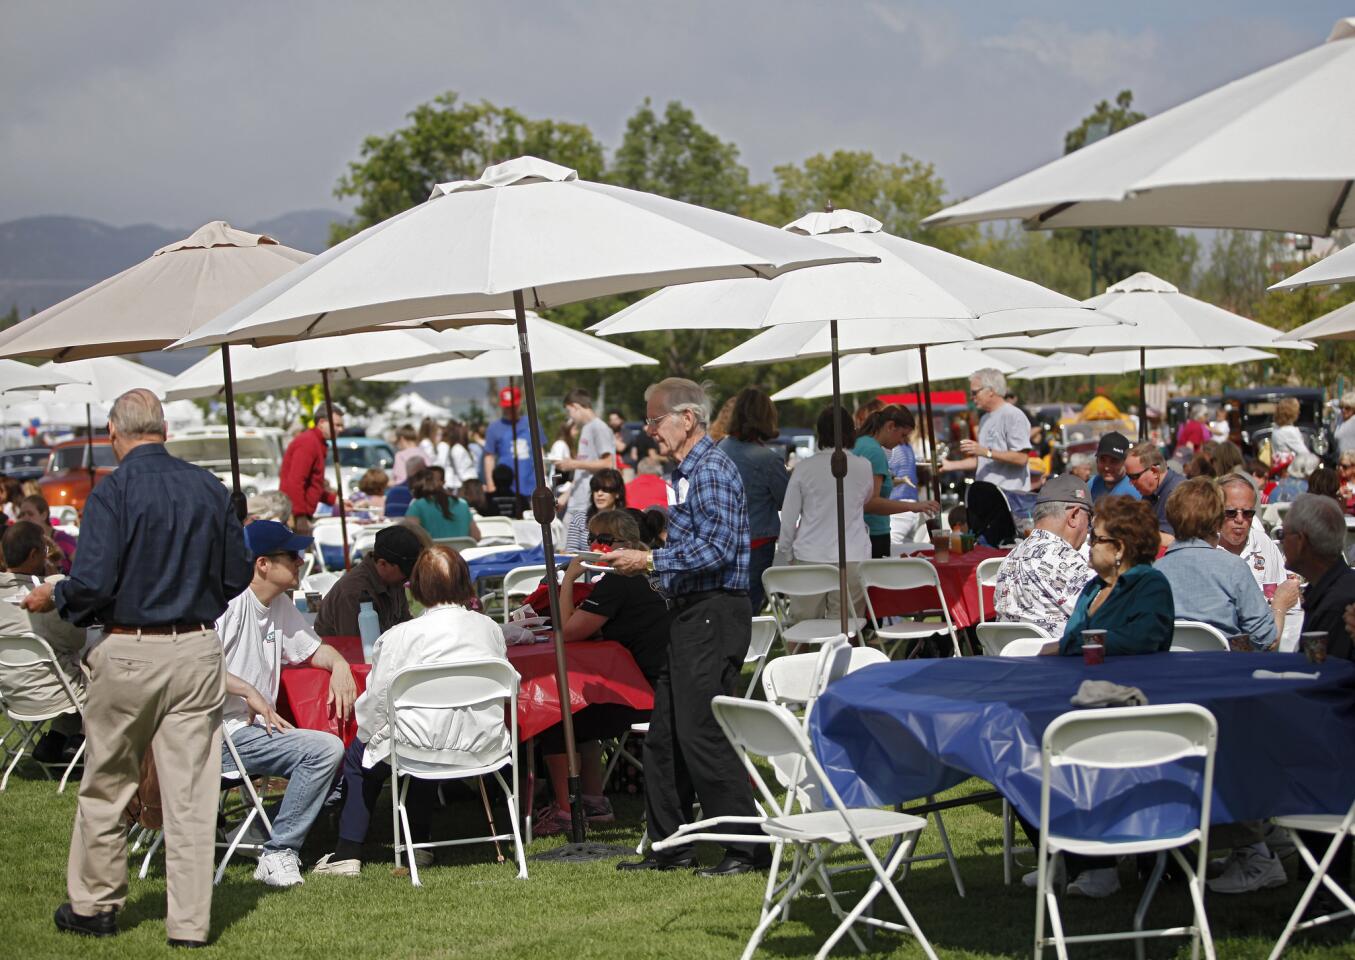 PHOTOS: La Cañada Flintridge Memorial Park's Easter event